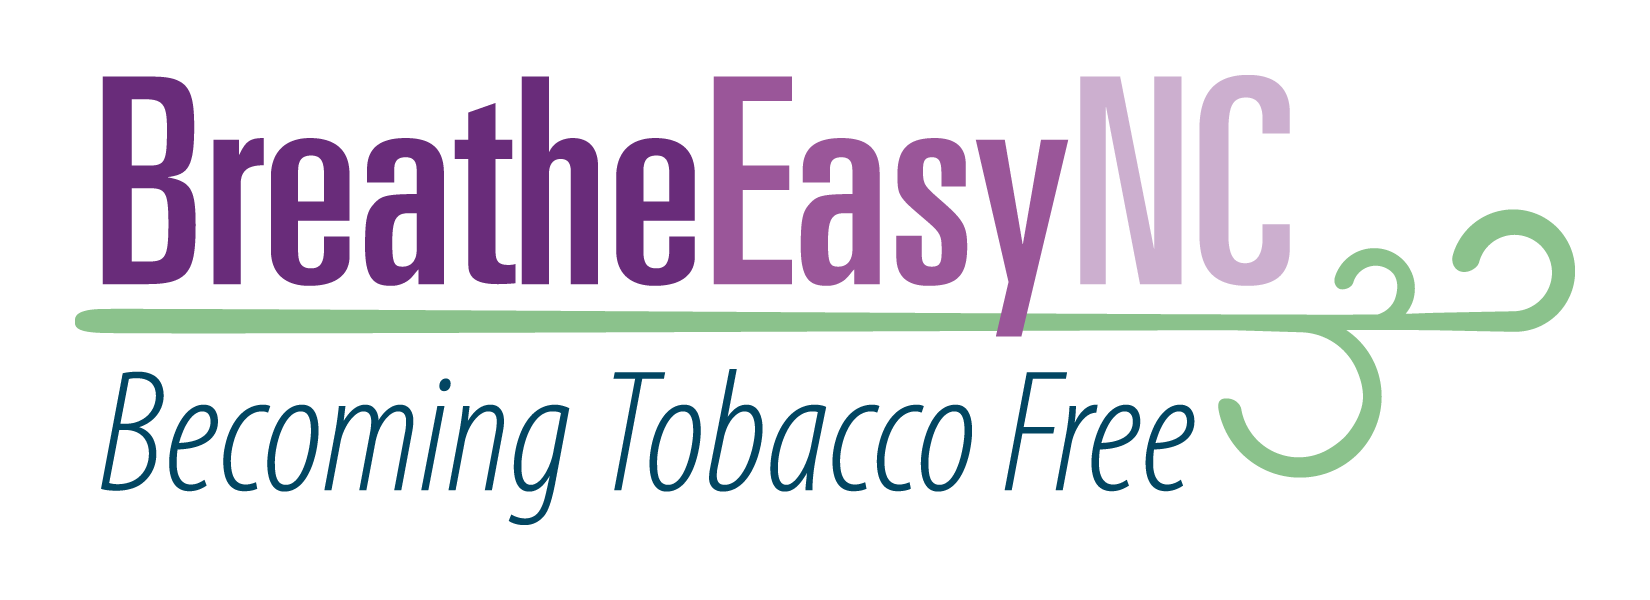 HLT - Tobacco Free BreathEasyNC Becoming Tobacco Free logo